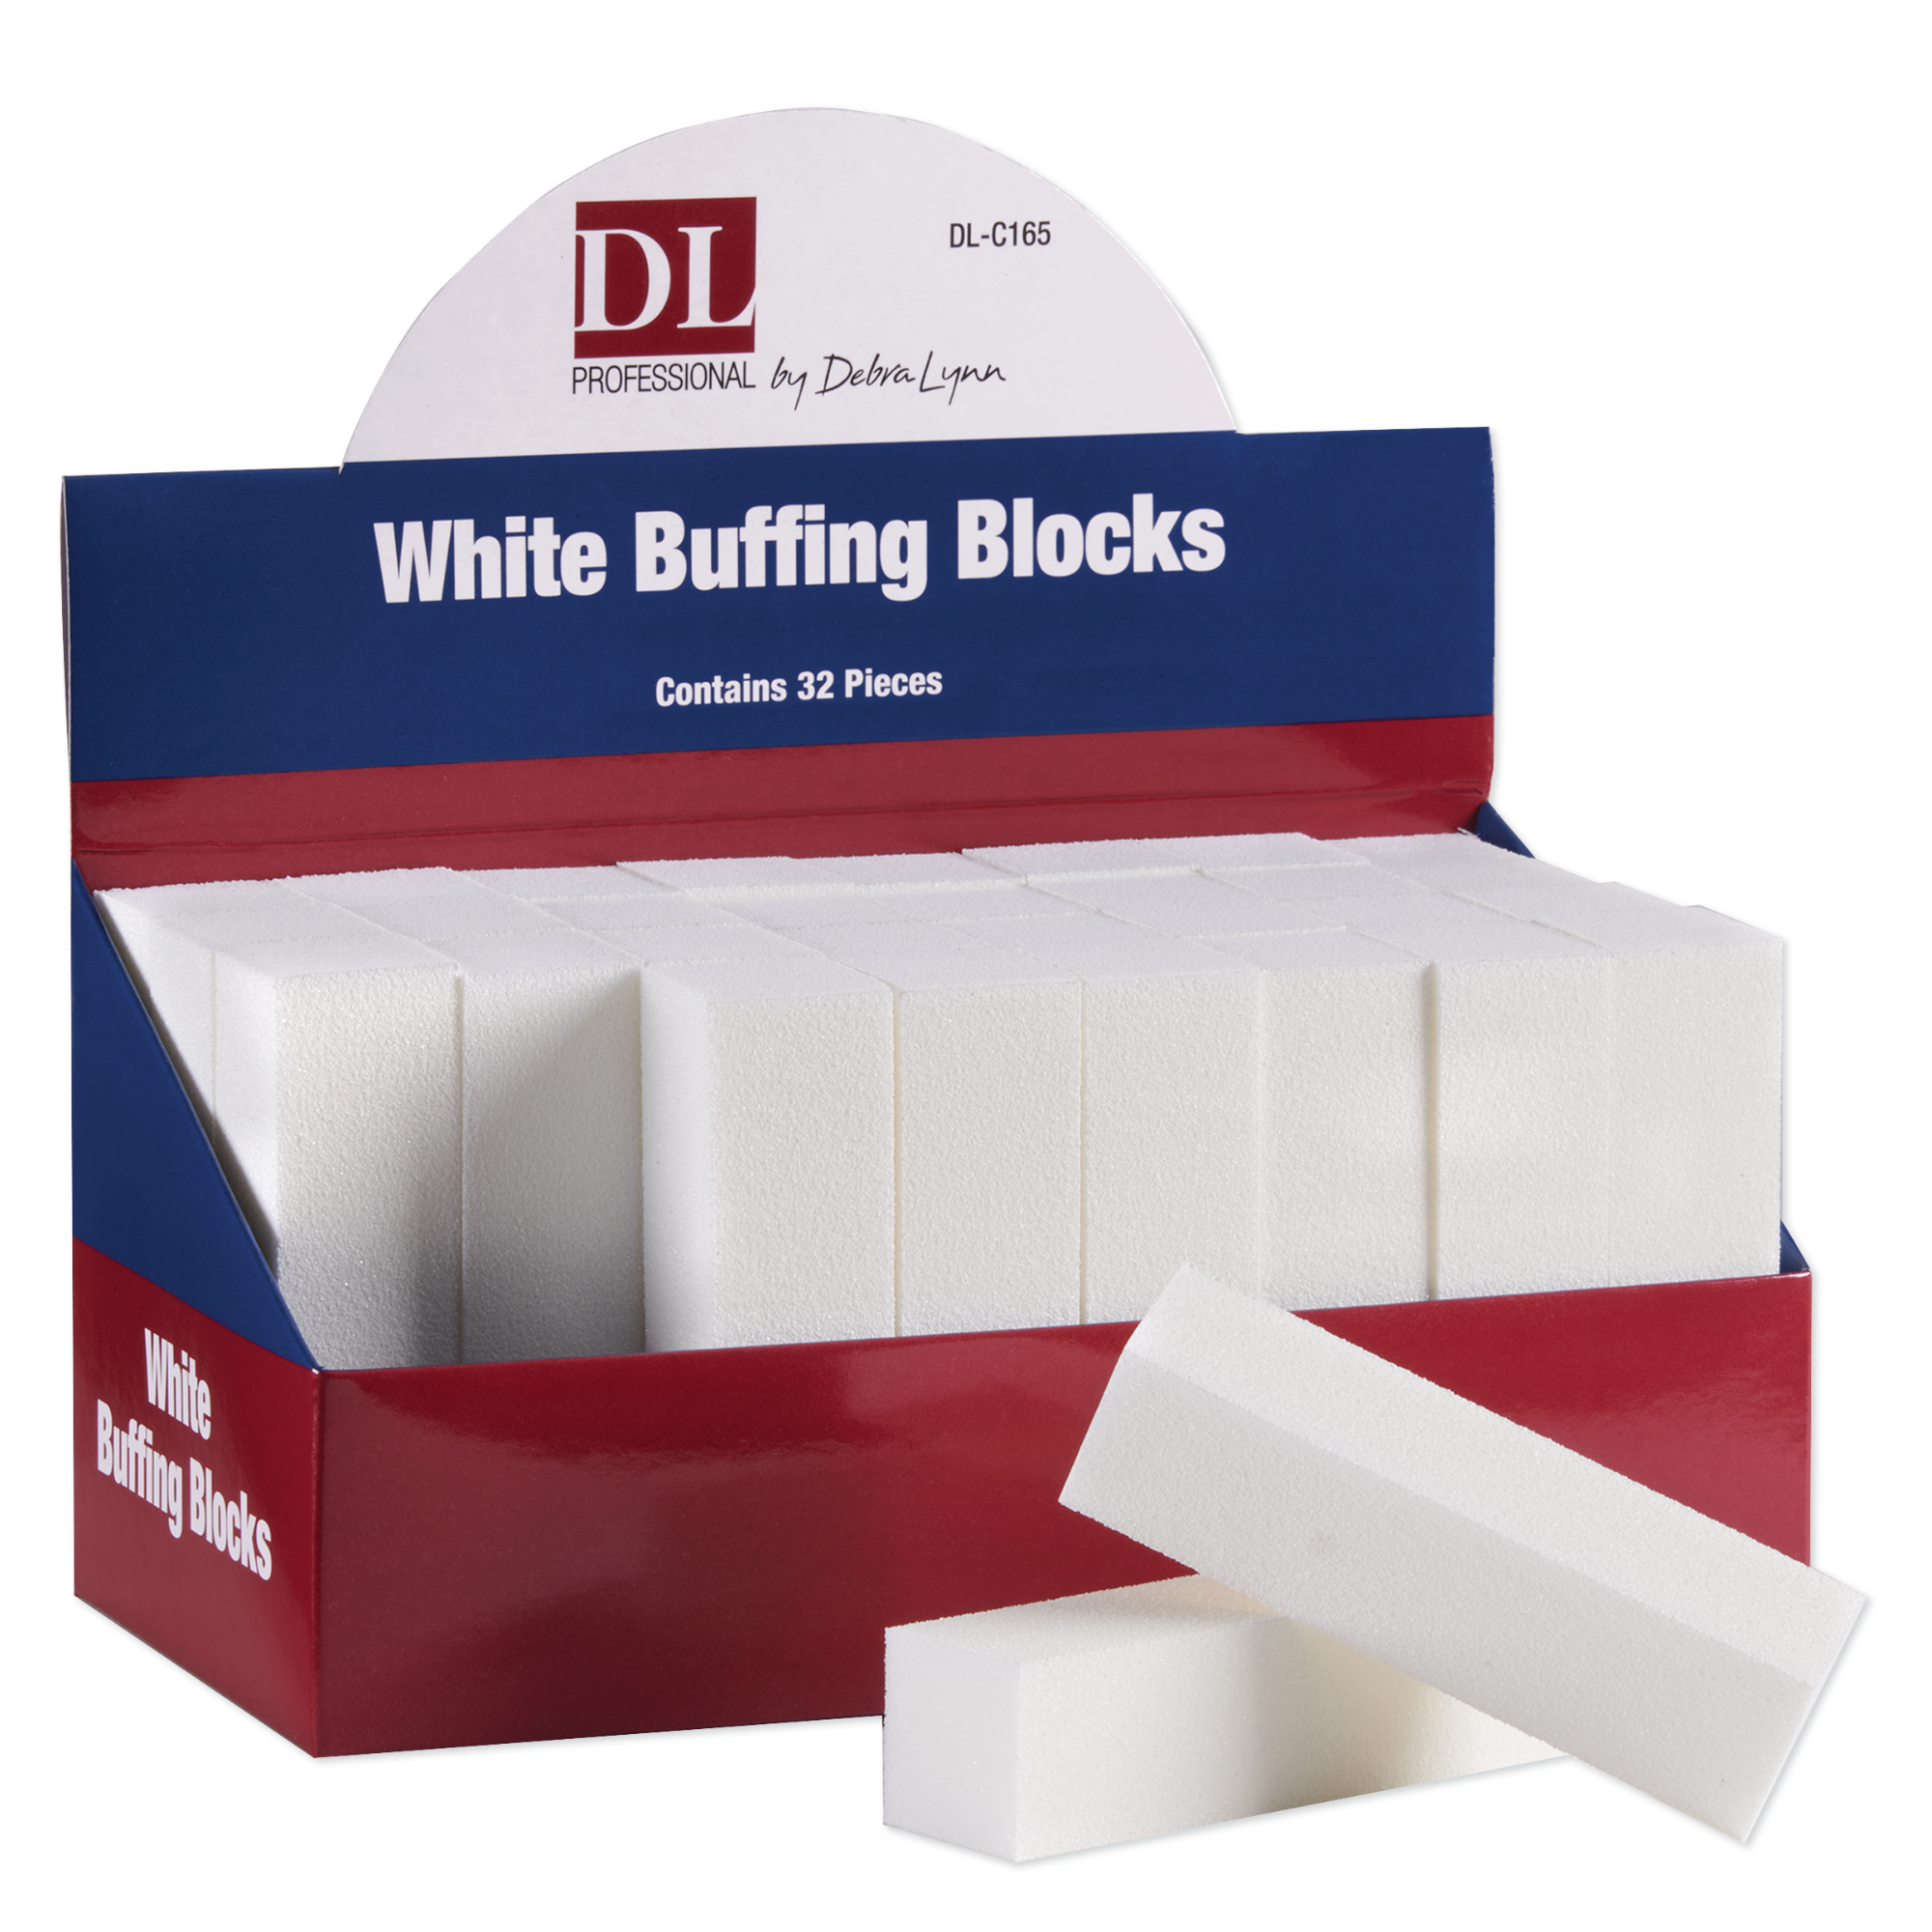 Buffing Blocks Display - 32 pc.